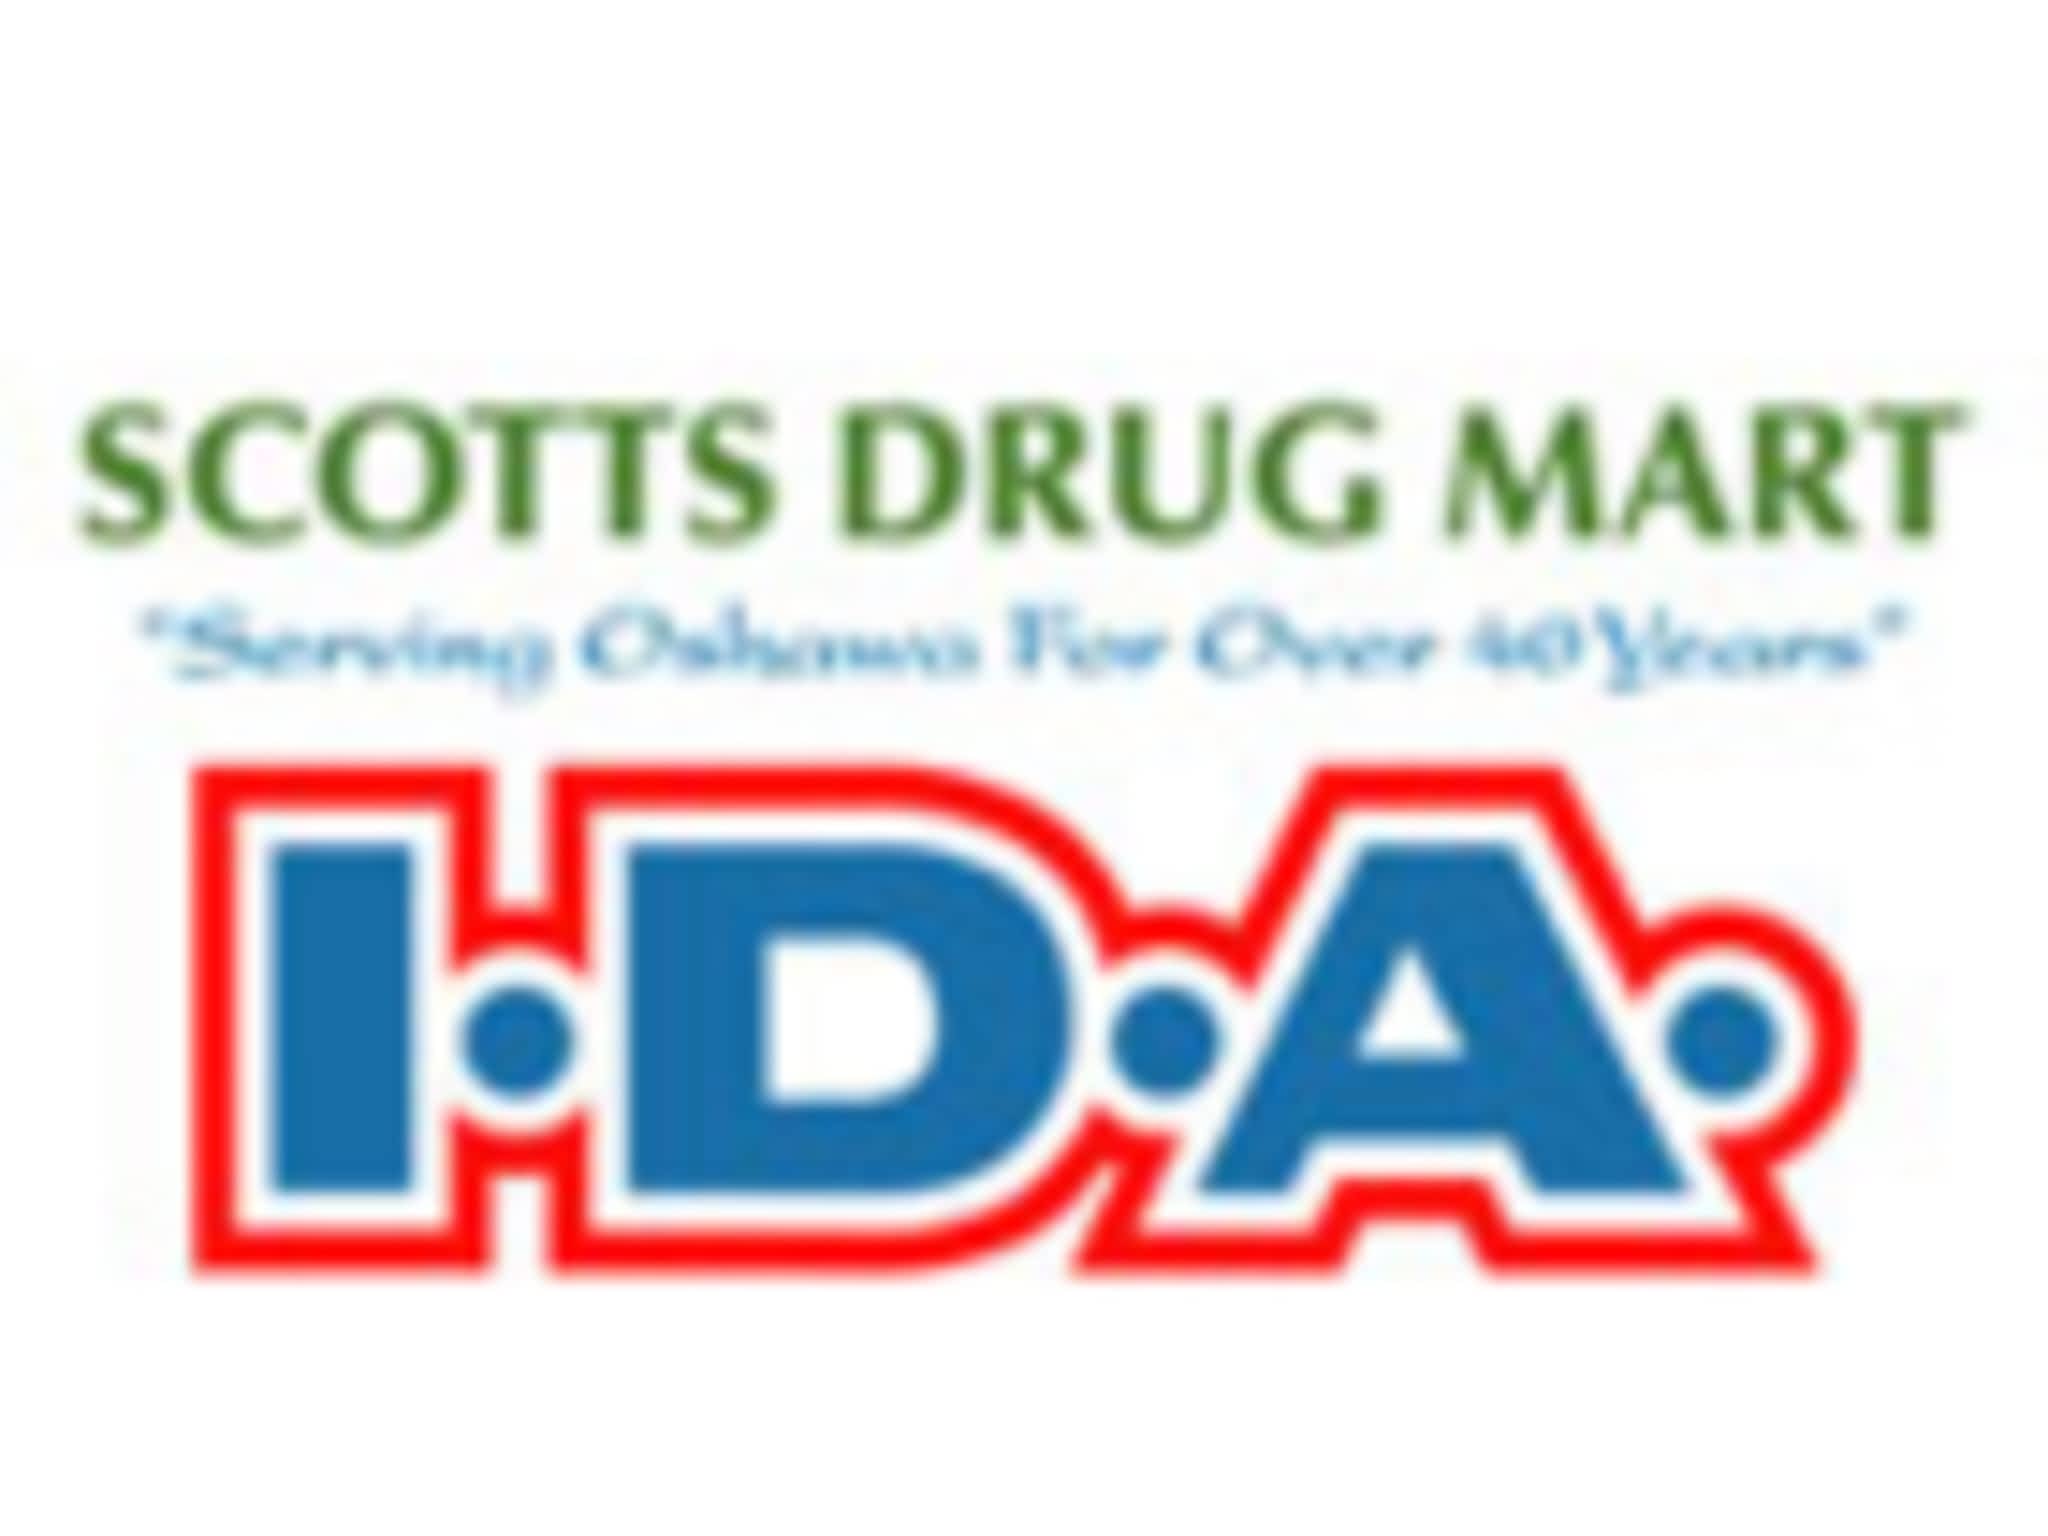 photo I.D.A. - Scotts Drug Mart